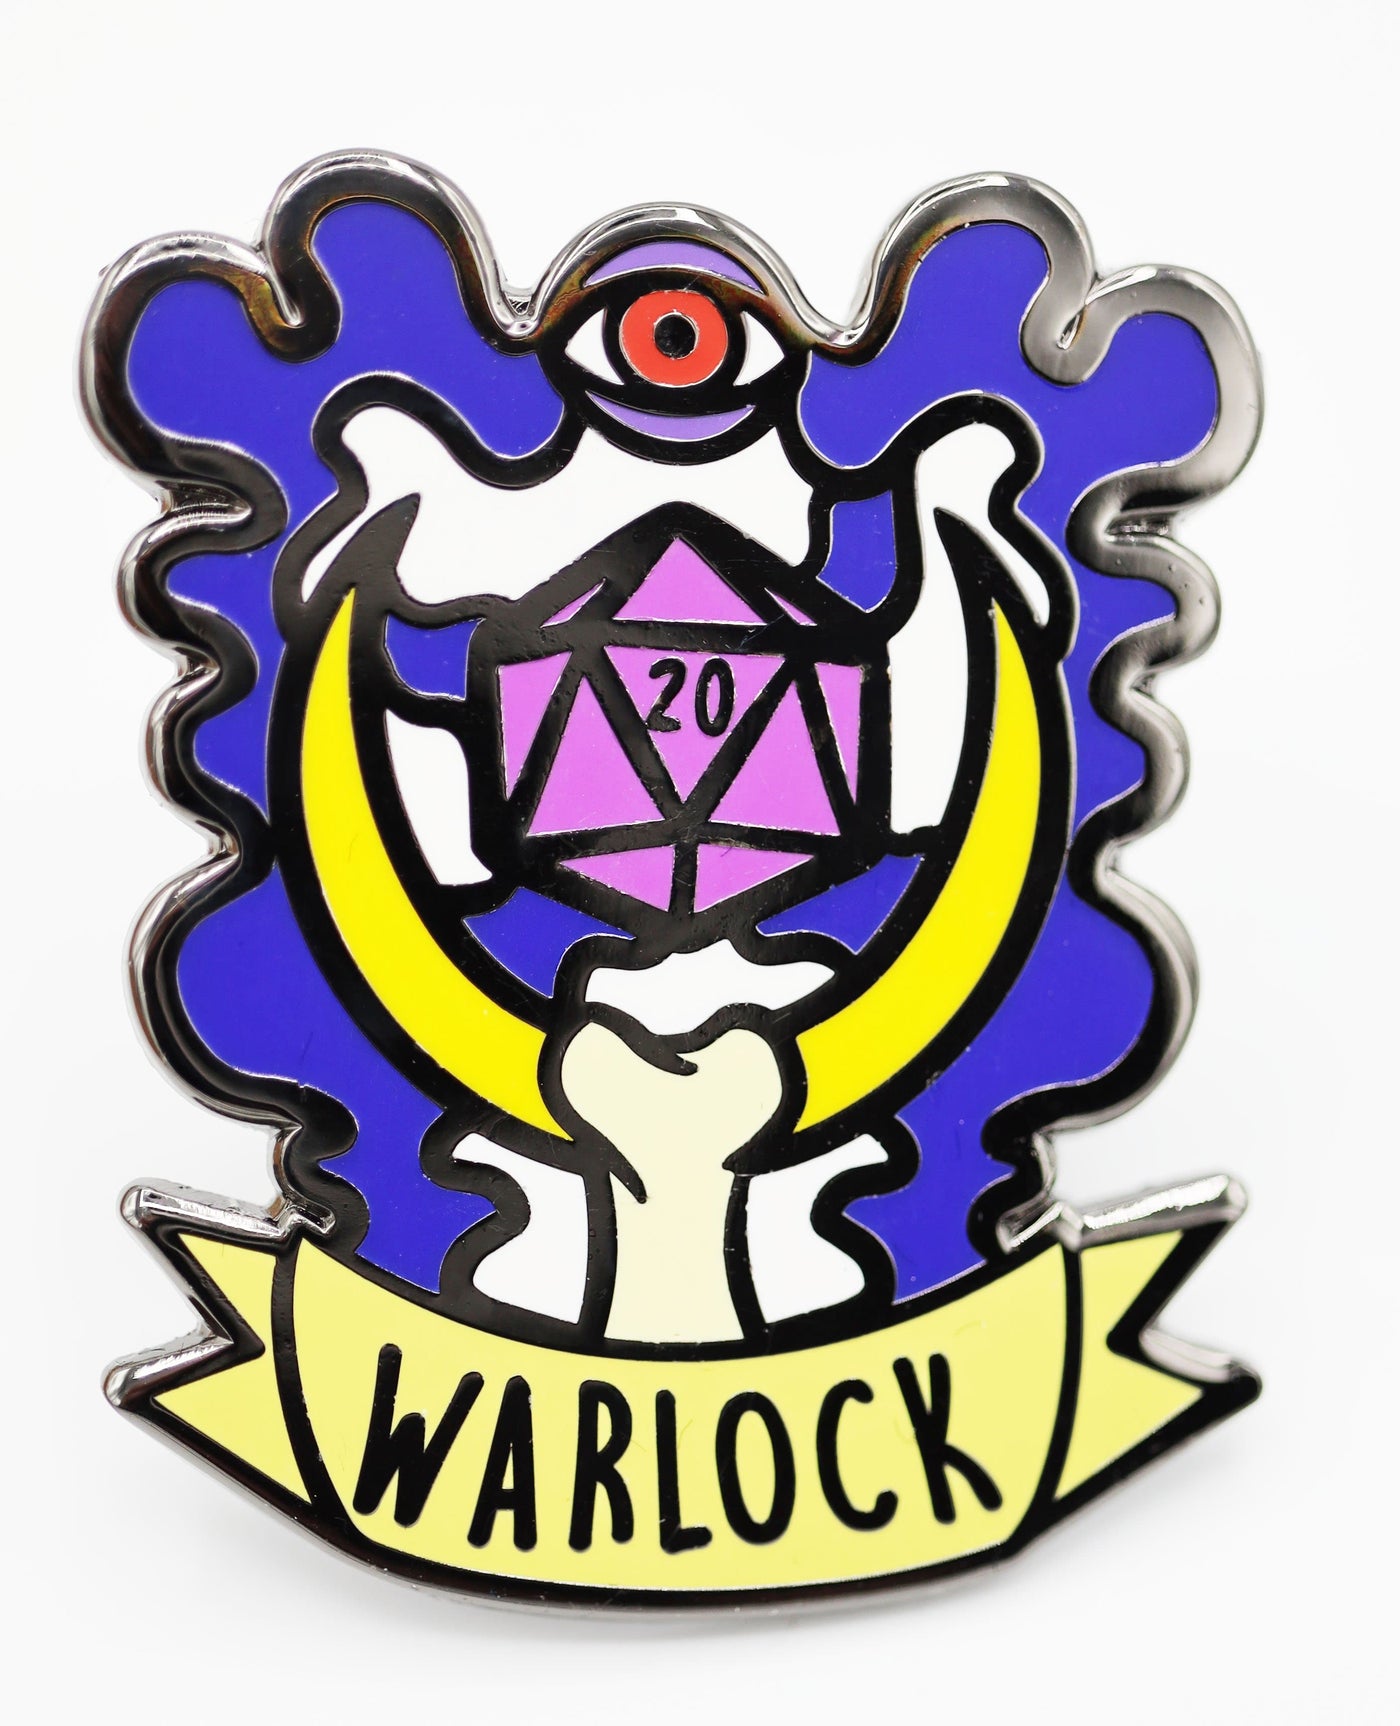 Banner Class Pin - Warlock Enamel Pin Foam Brain Games